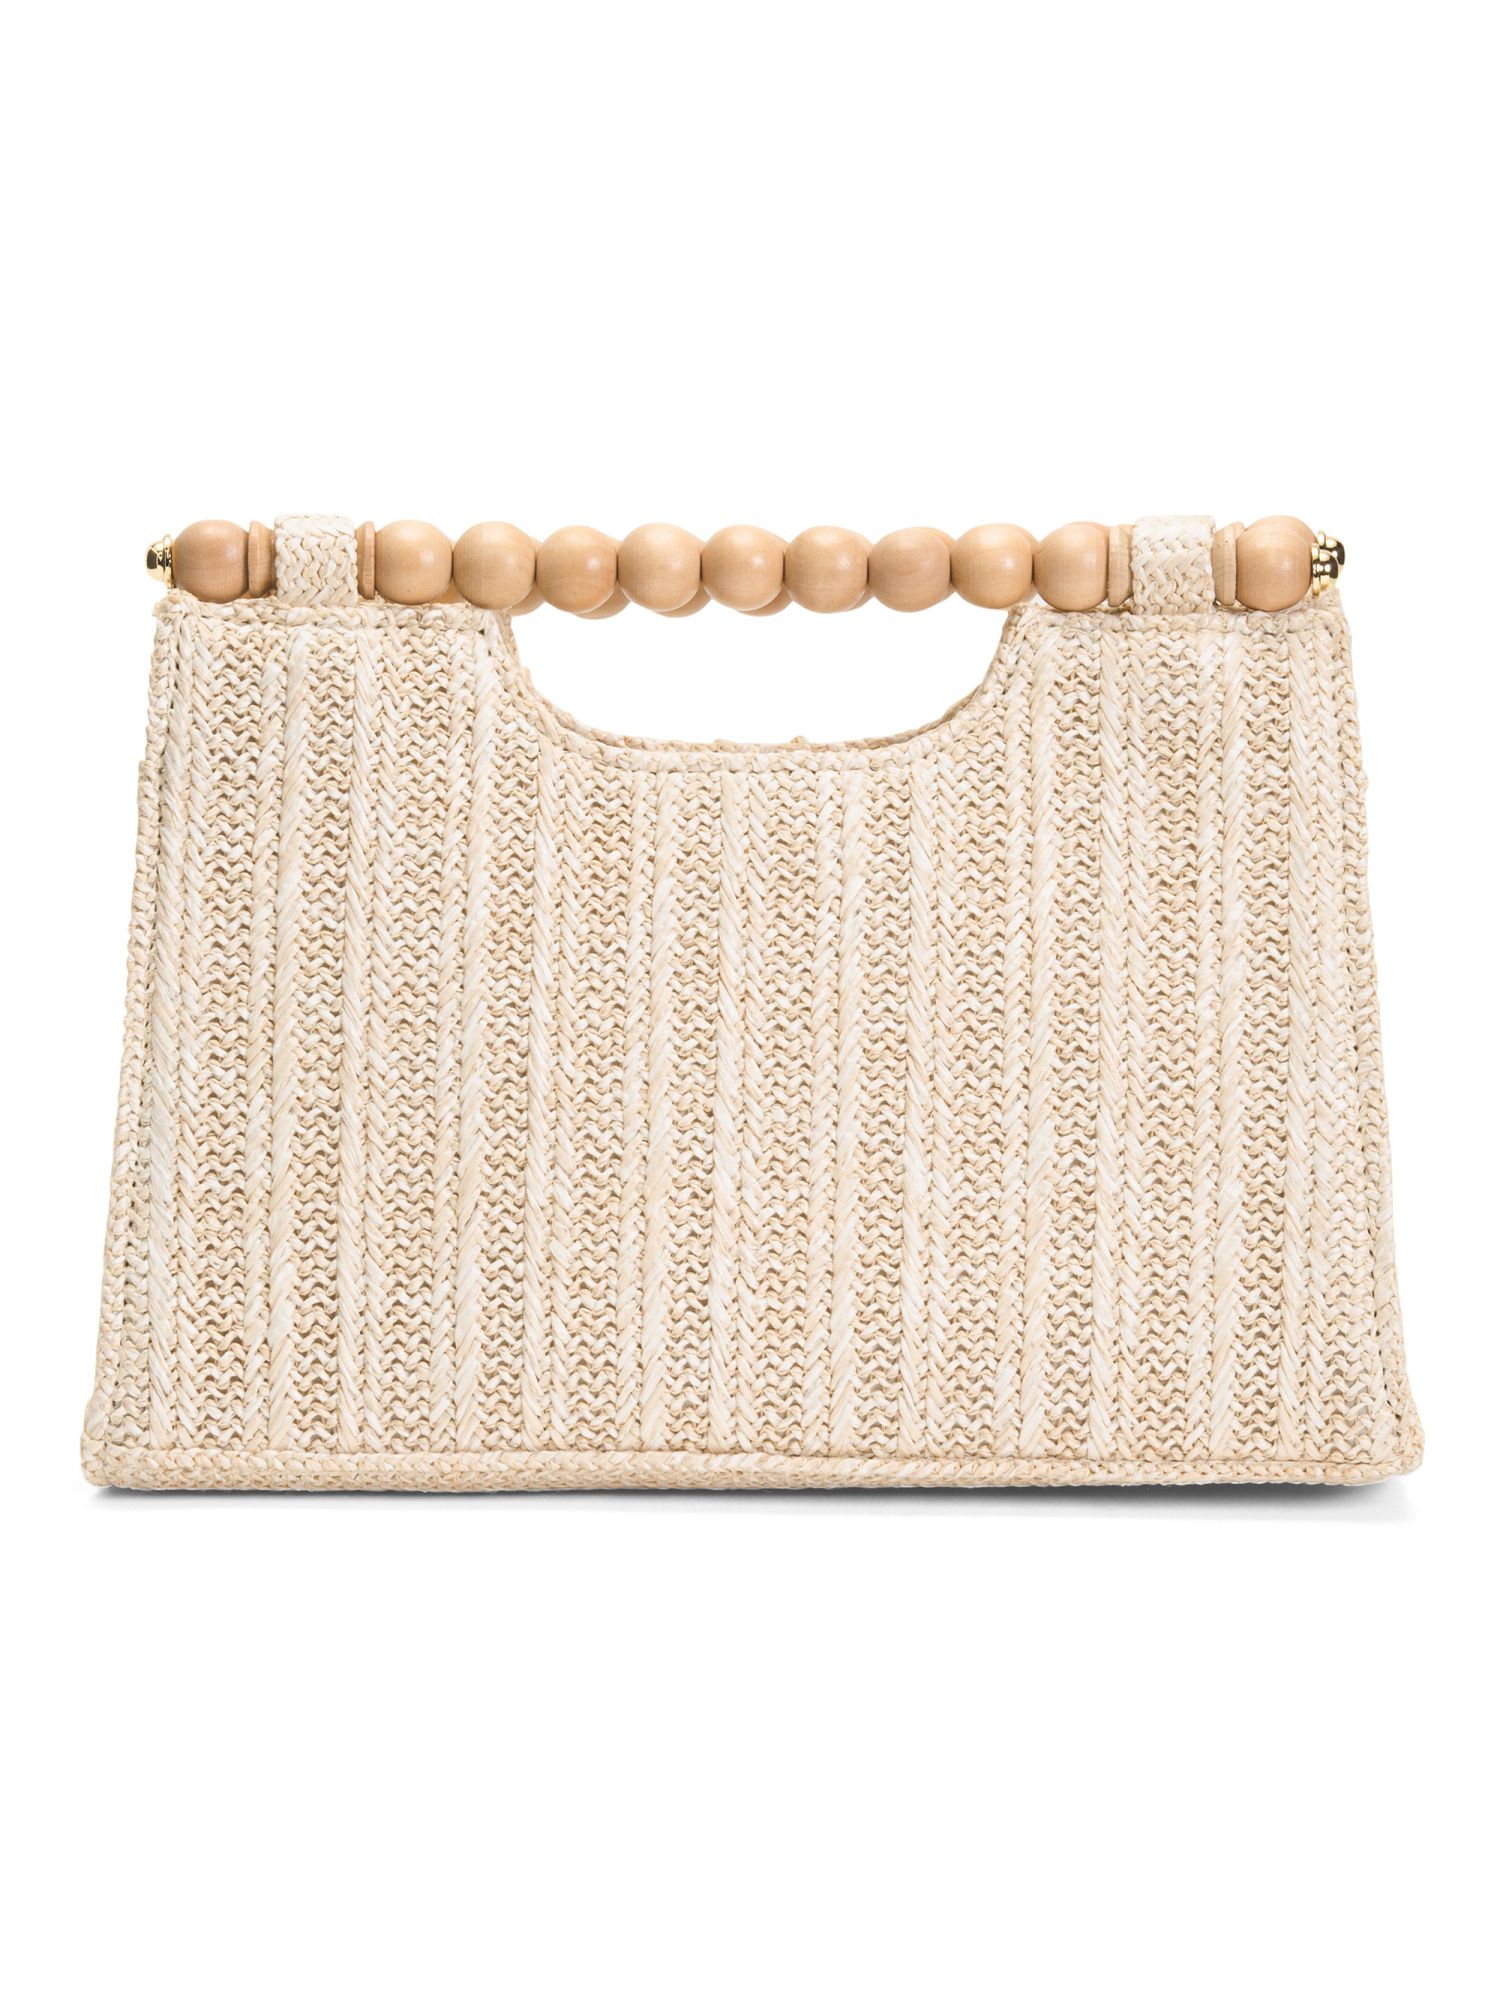 Natural Woven Clutch With Bamboo Handles | Handbags | Marshalls | Marshalls